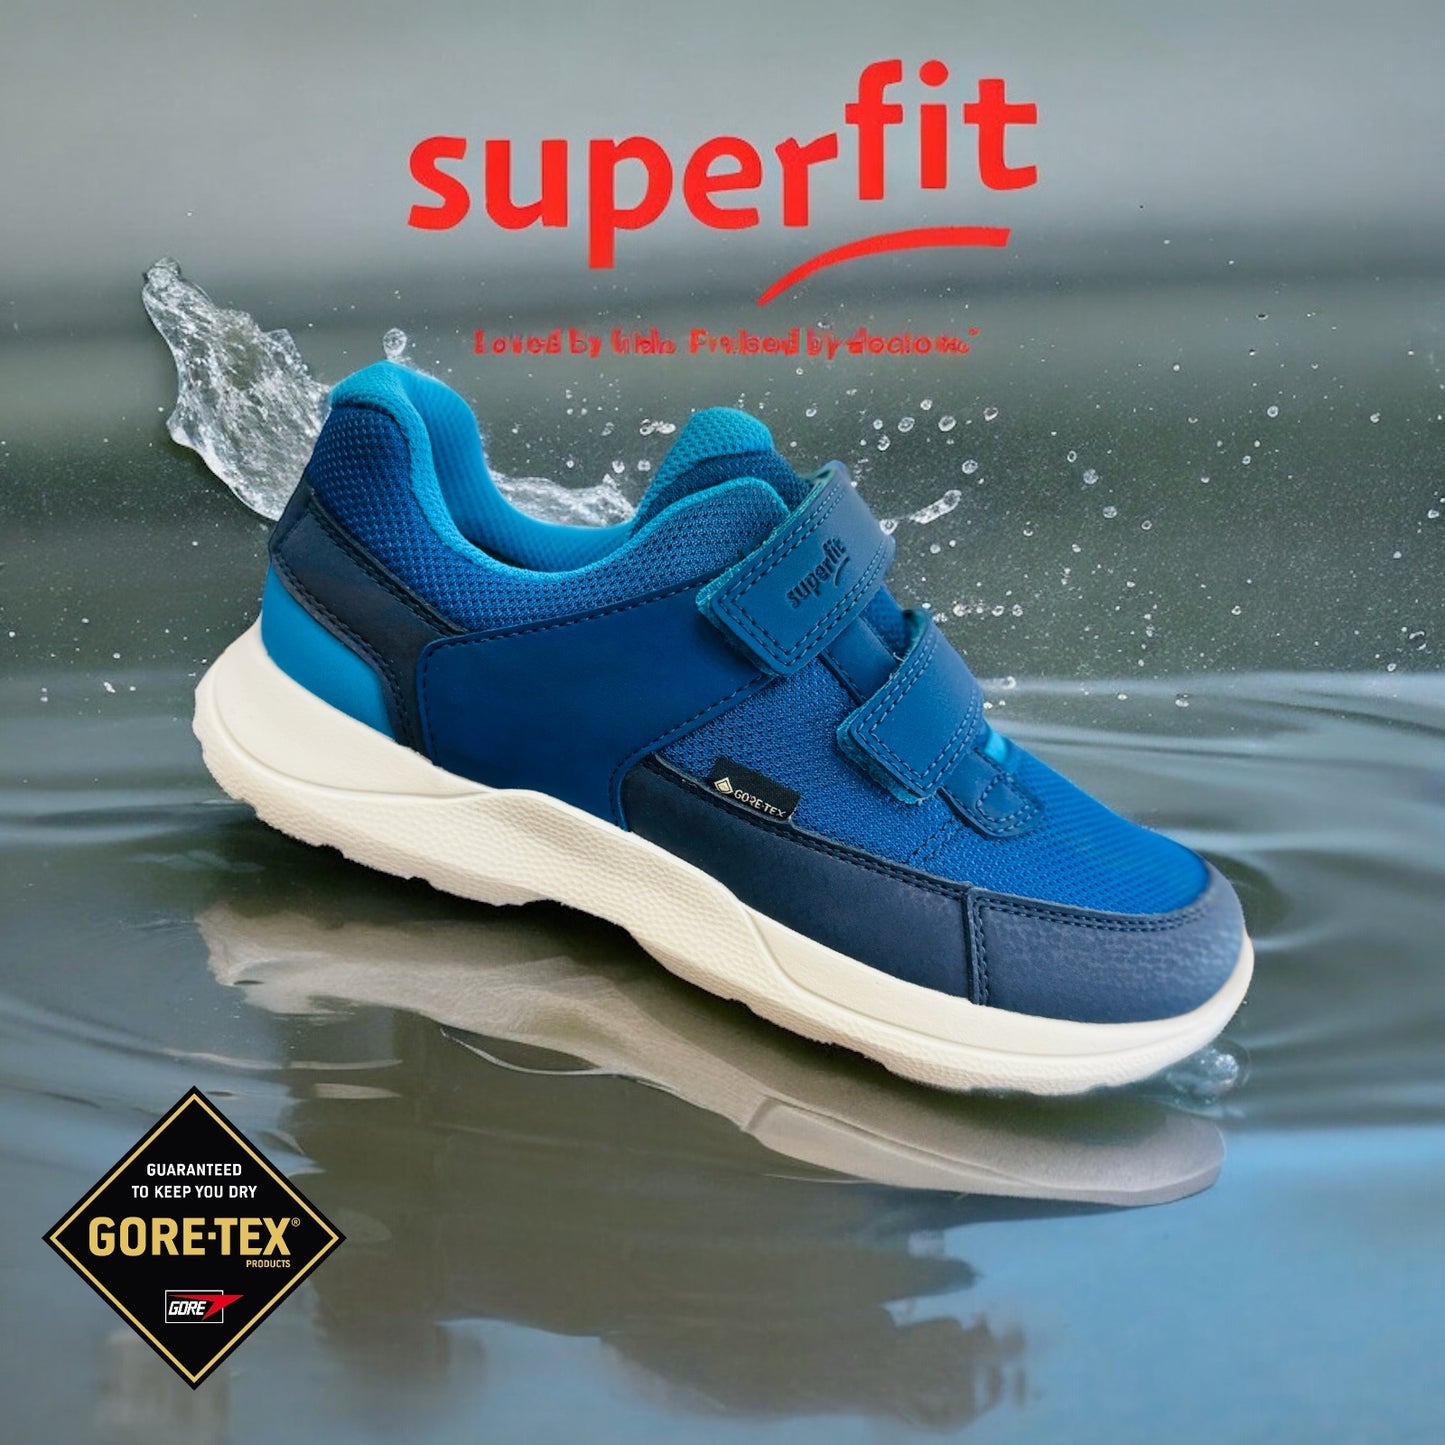 SuperFit Rush blue goretex waterproof